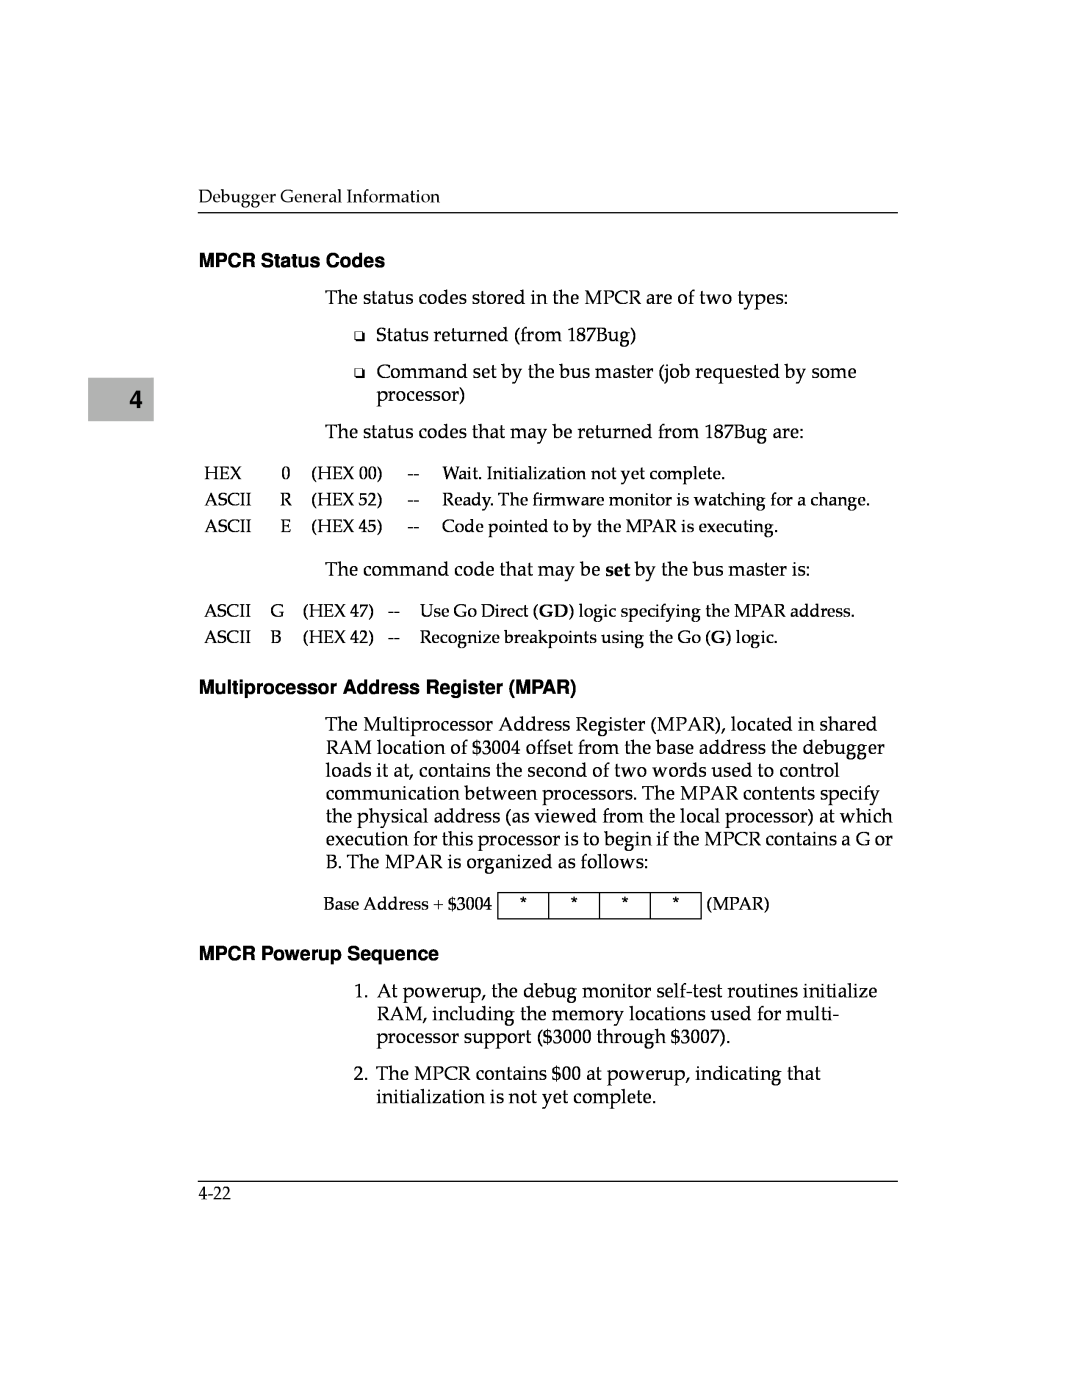 Motorola MVME187 manual MPCR Status Codes, Multiprocessor Address Register MPAR, MPCR Powerup Sequence 